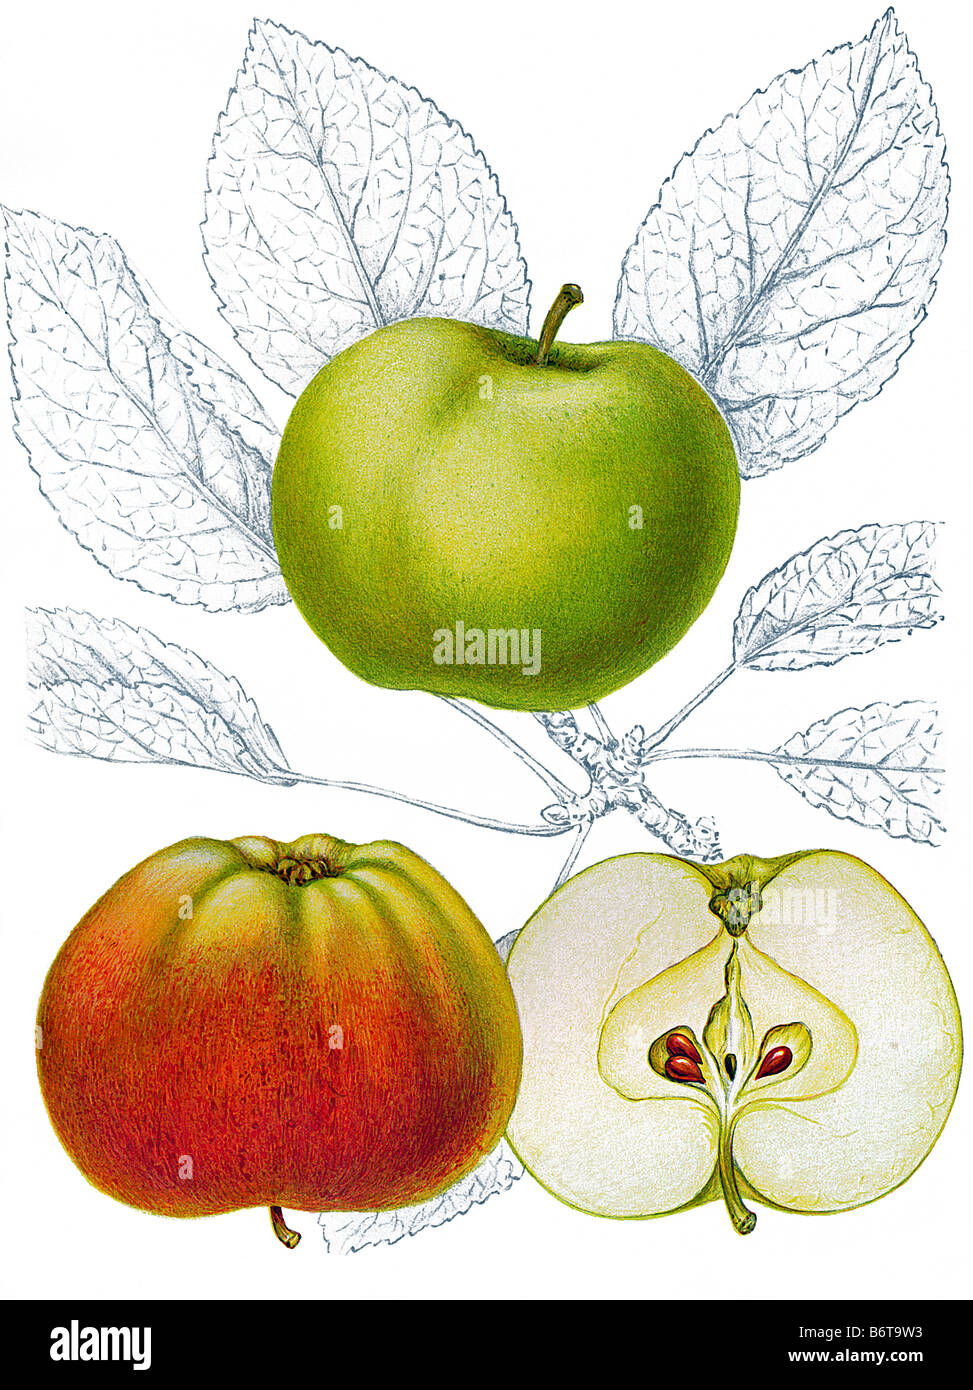 Illustration of the apple 'Bismarck' Stock Photo